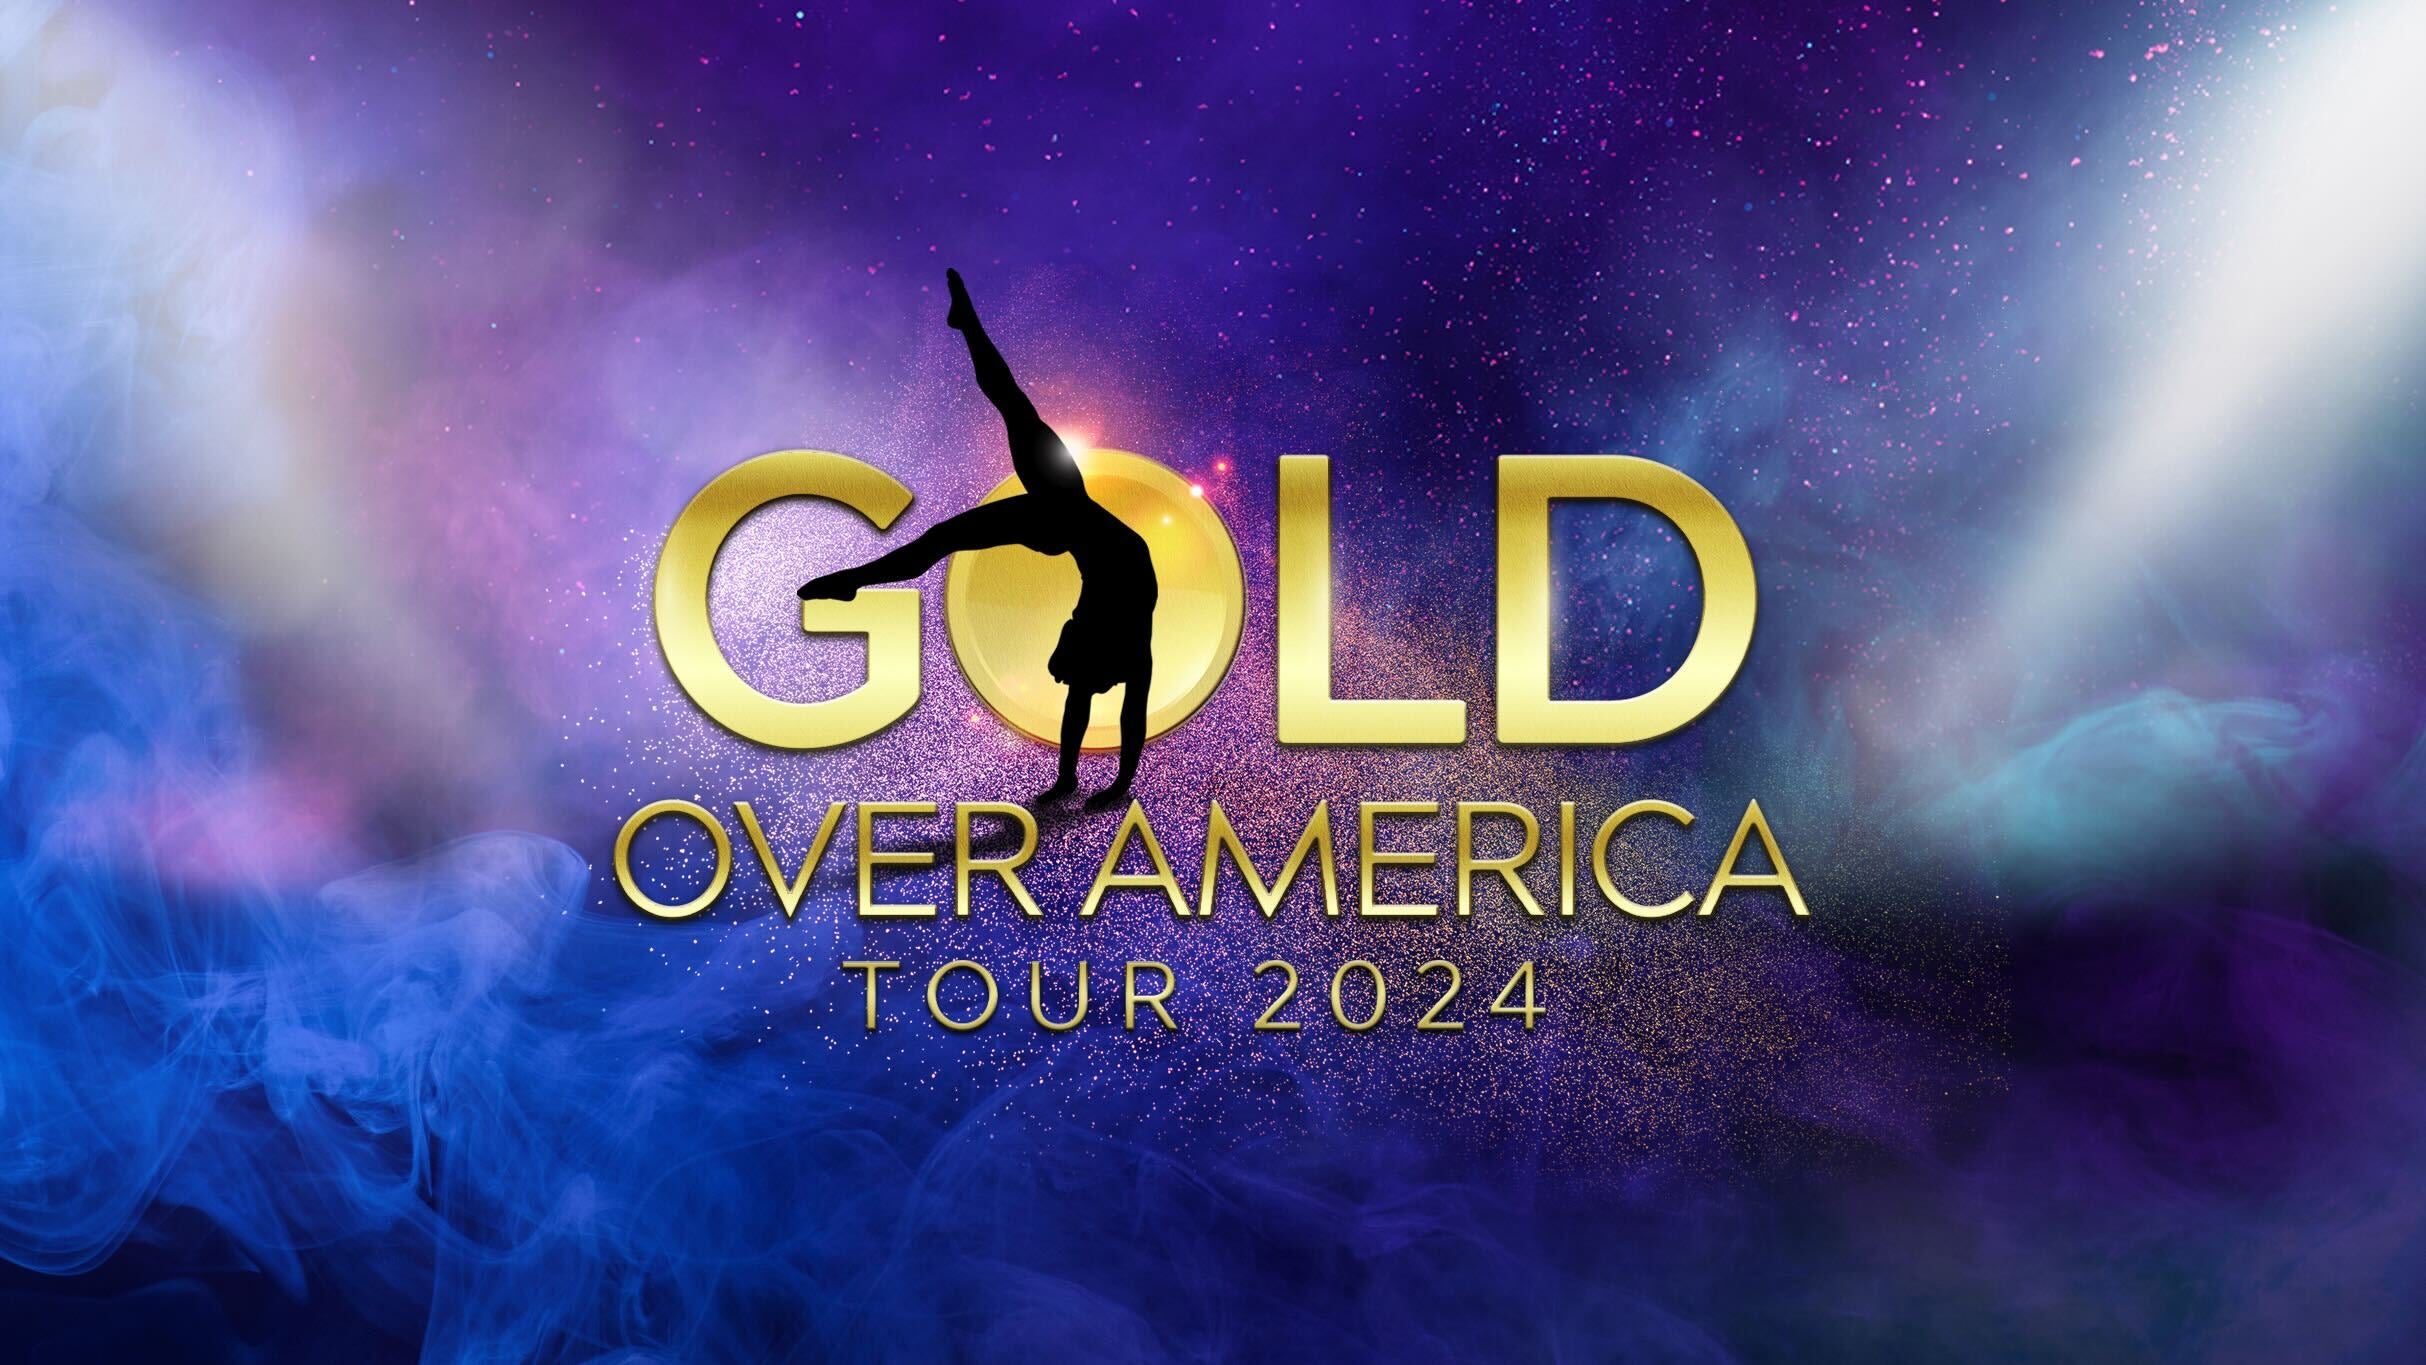 Gold Over America Tour Starring Simone Biles in Baltimore promo photo for AEG presale offer code